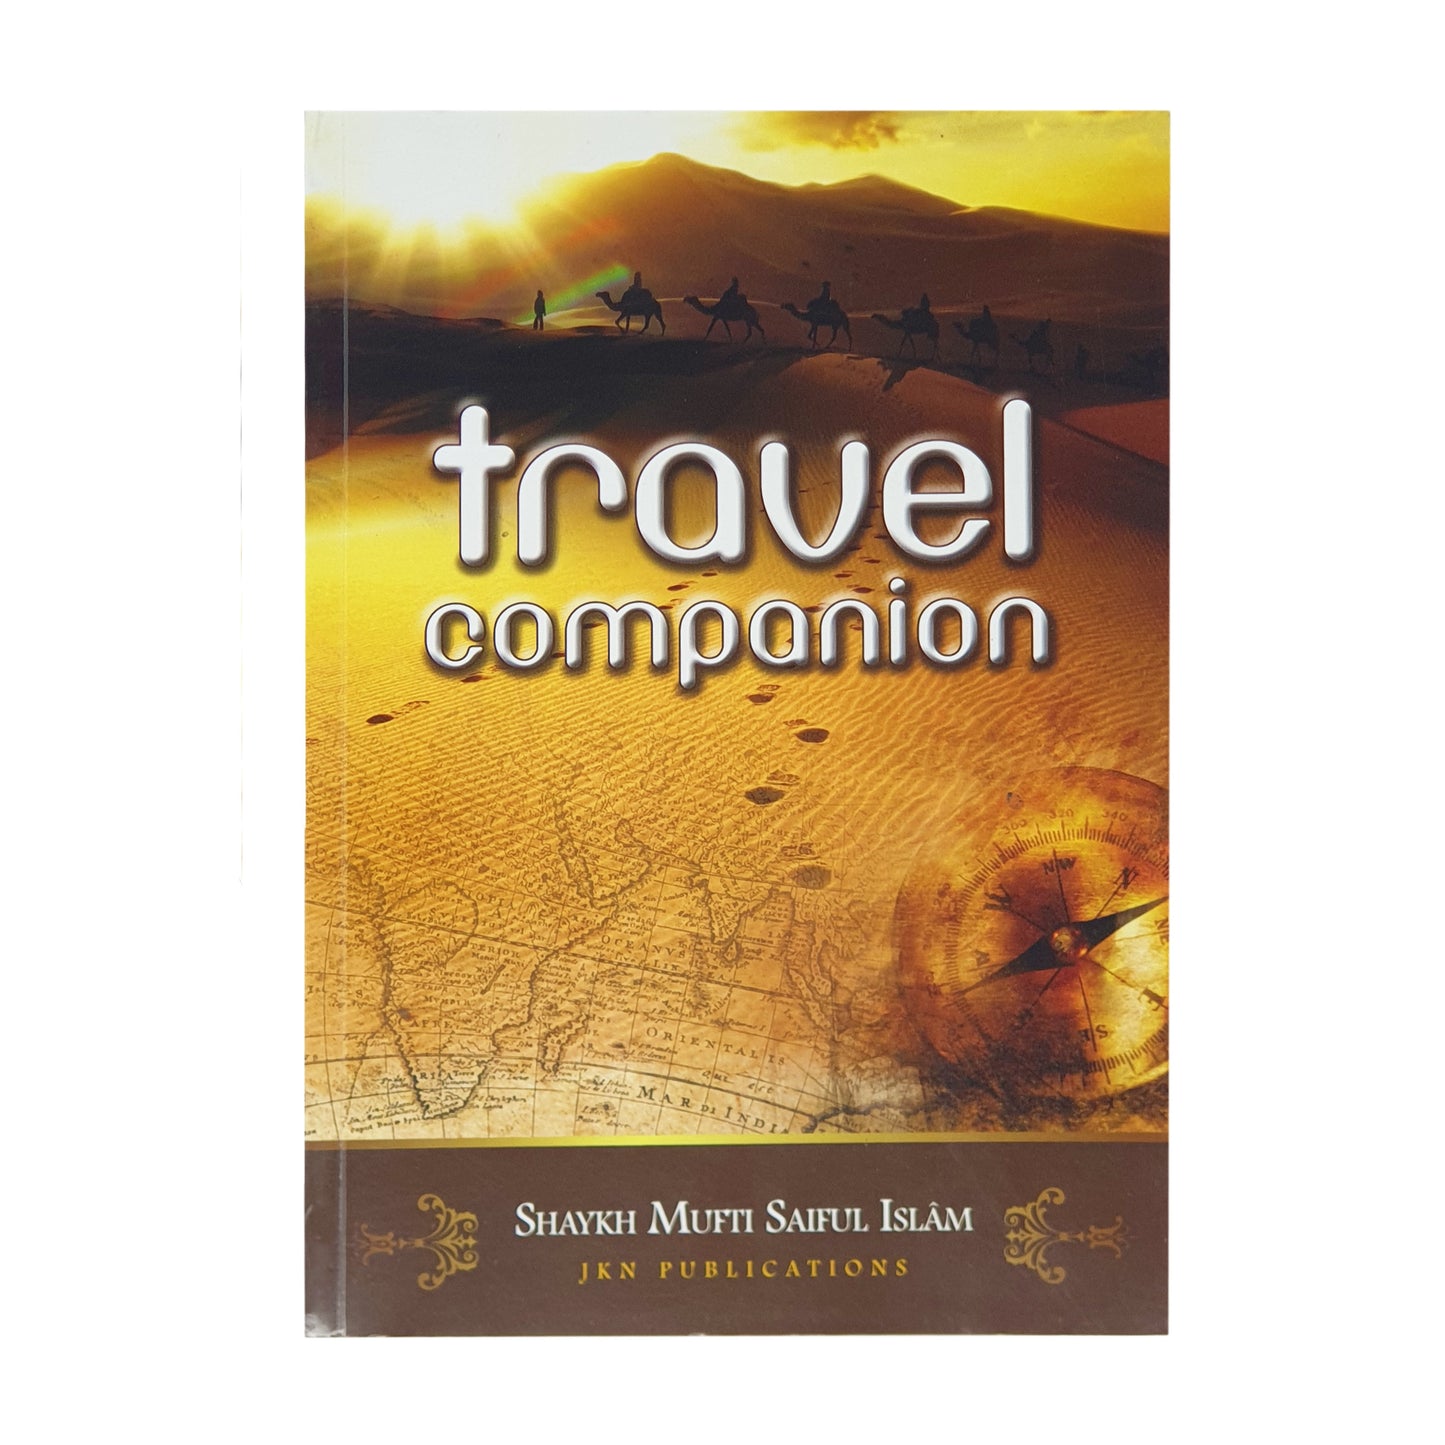 Travel Companion